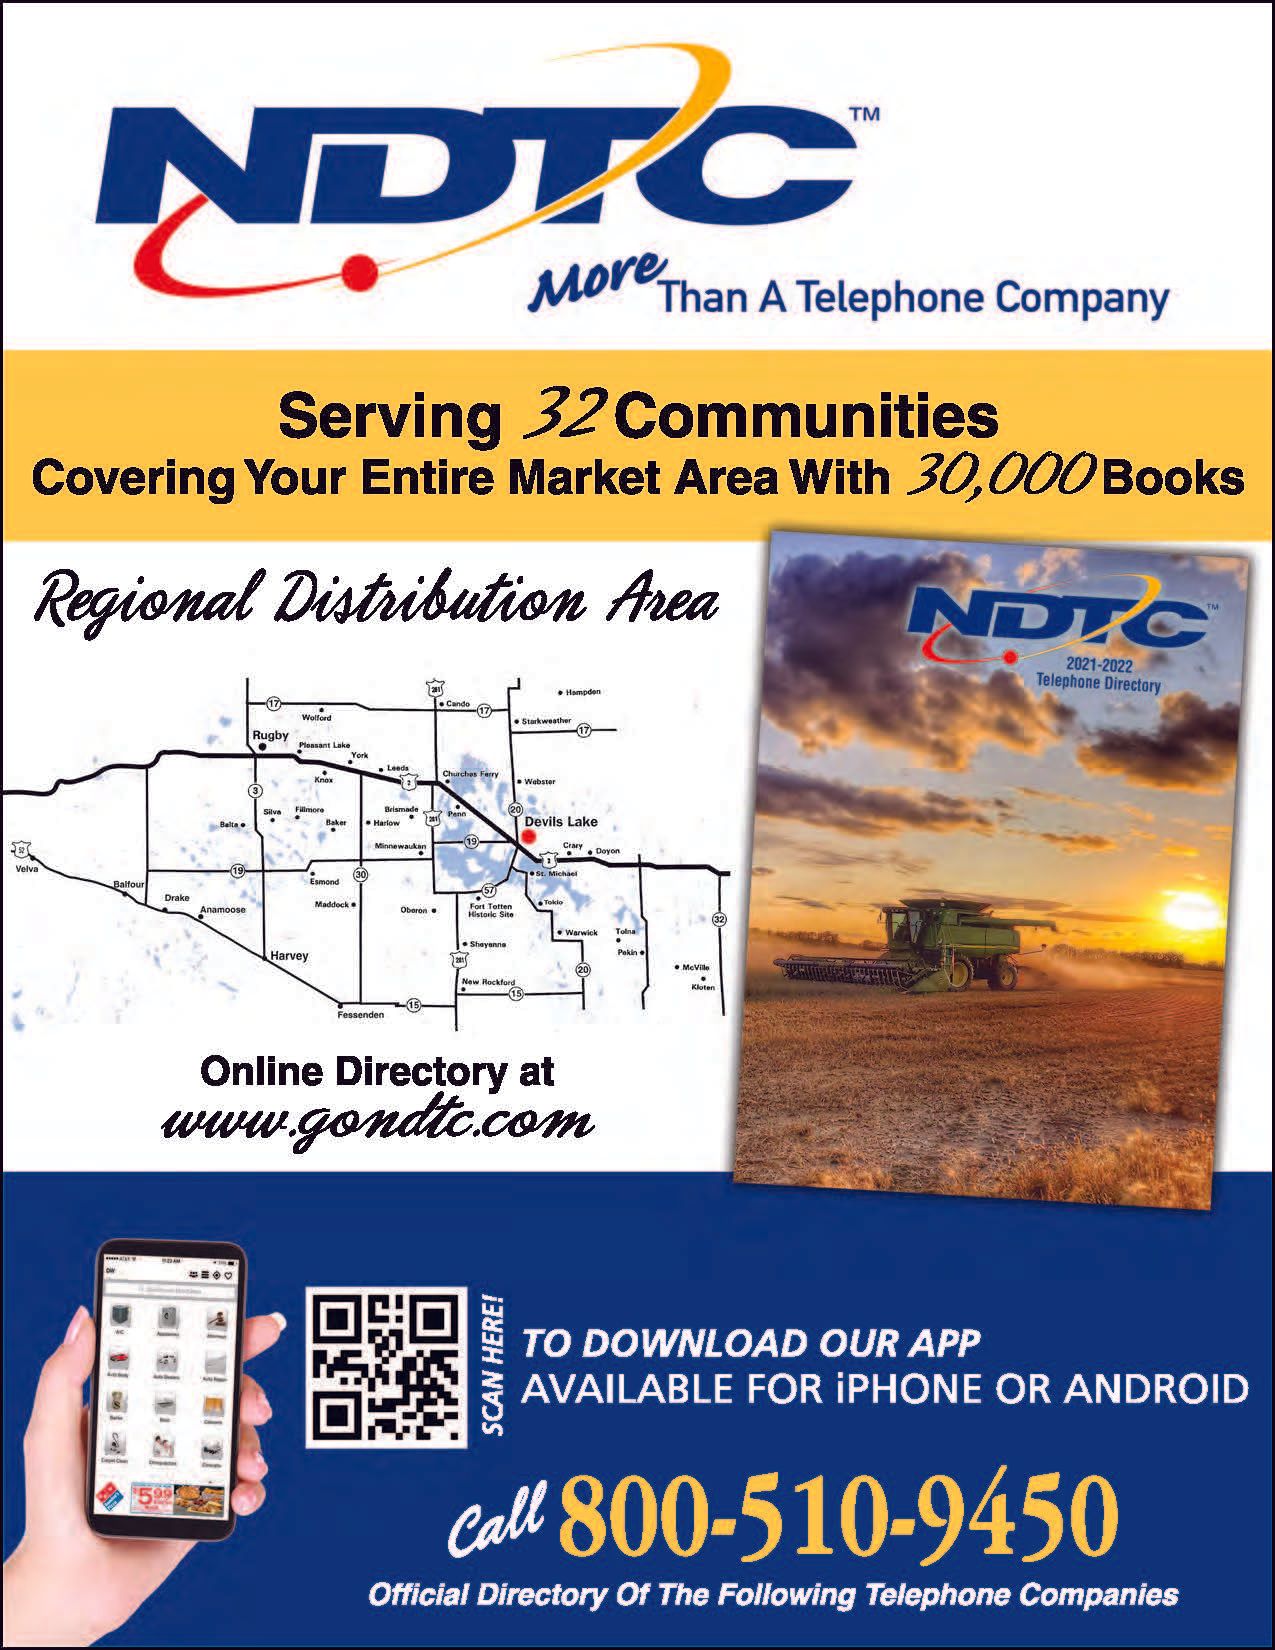 NDTC Telephone Directory